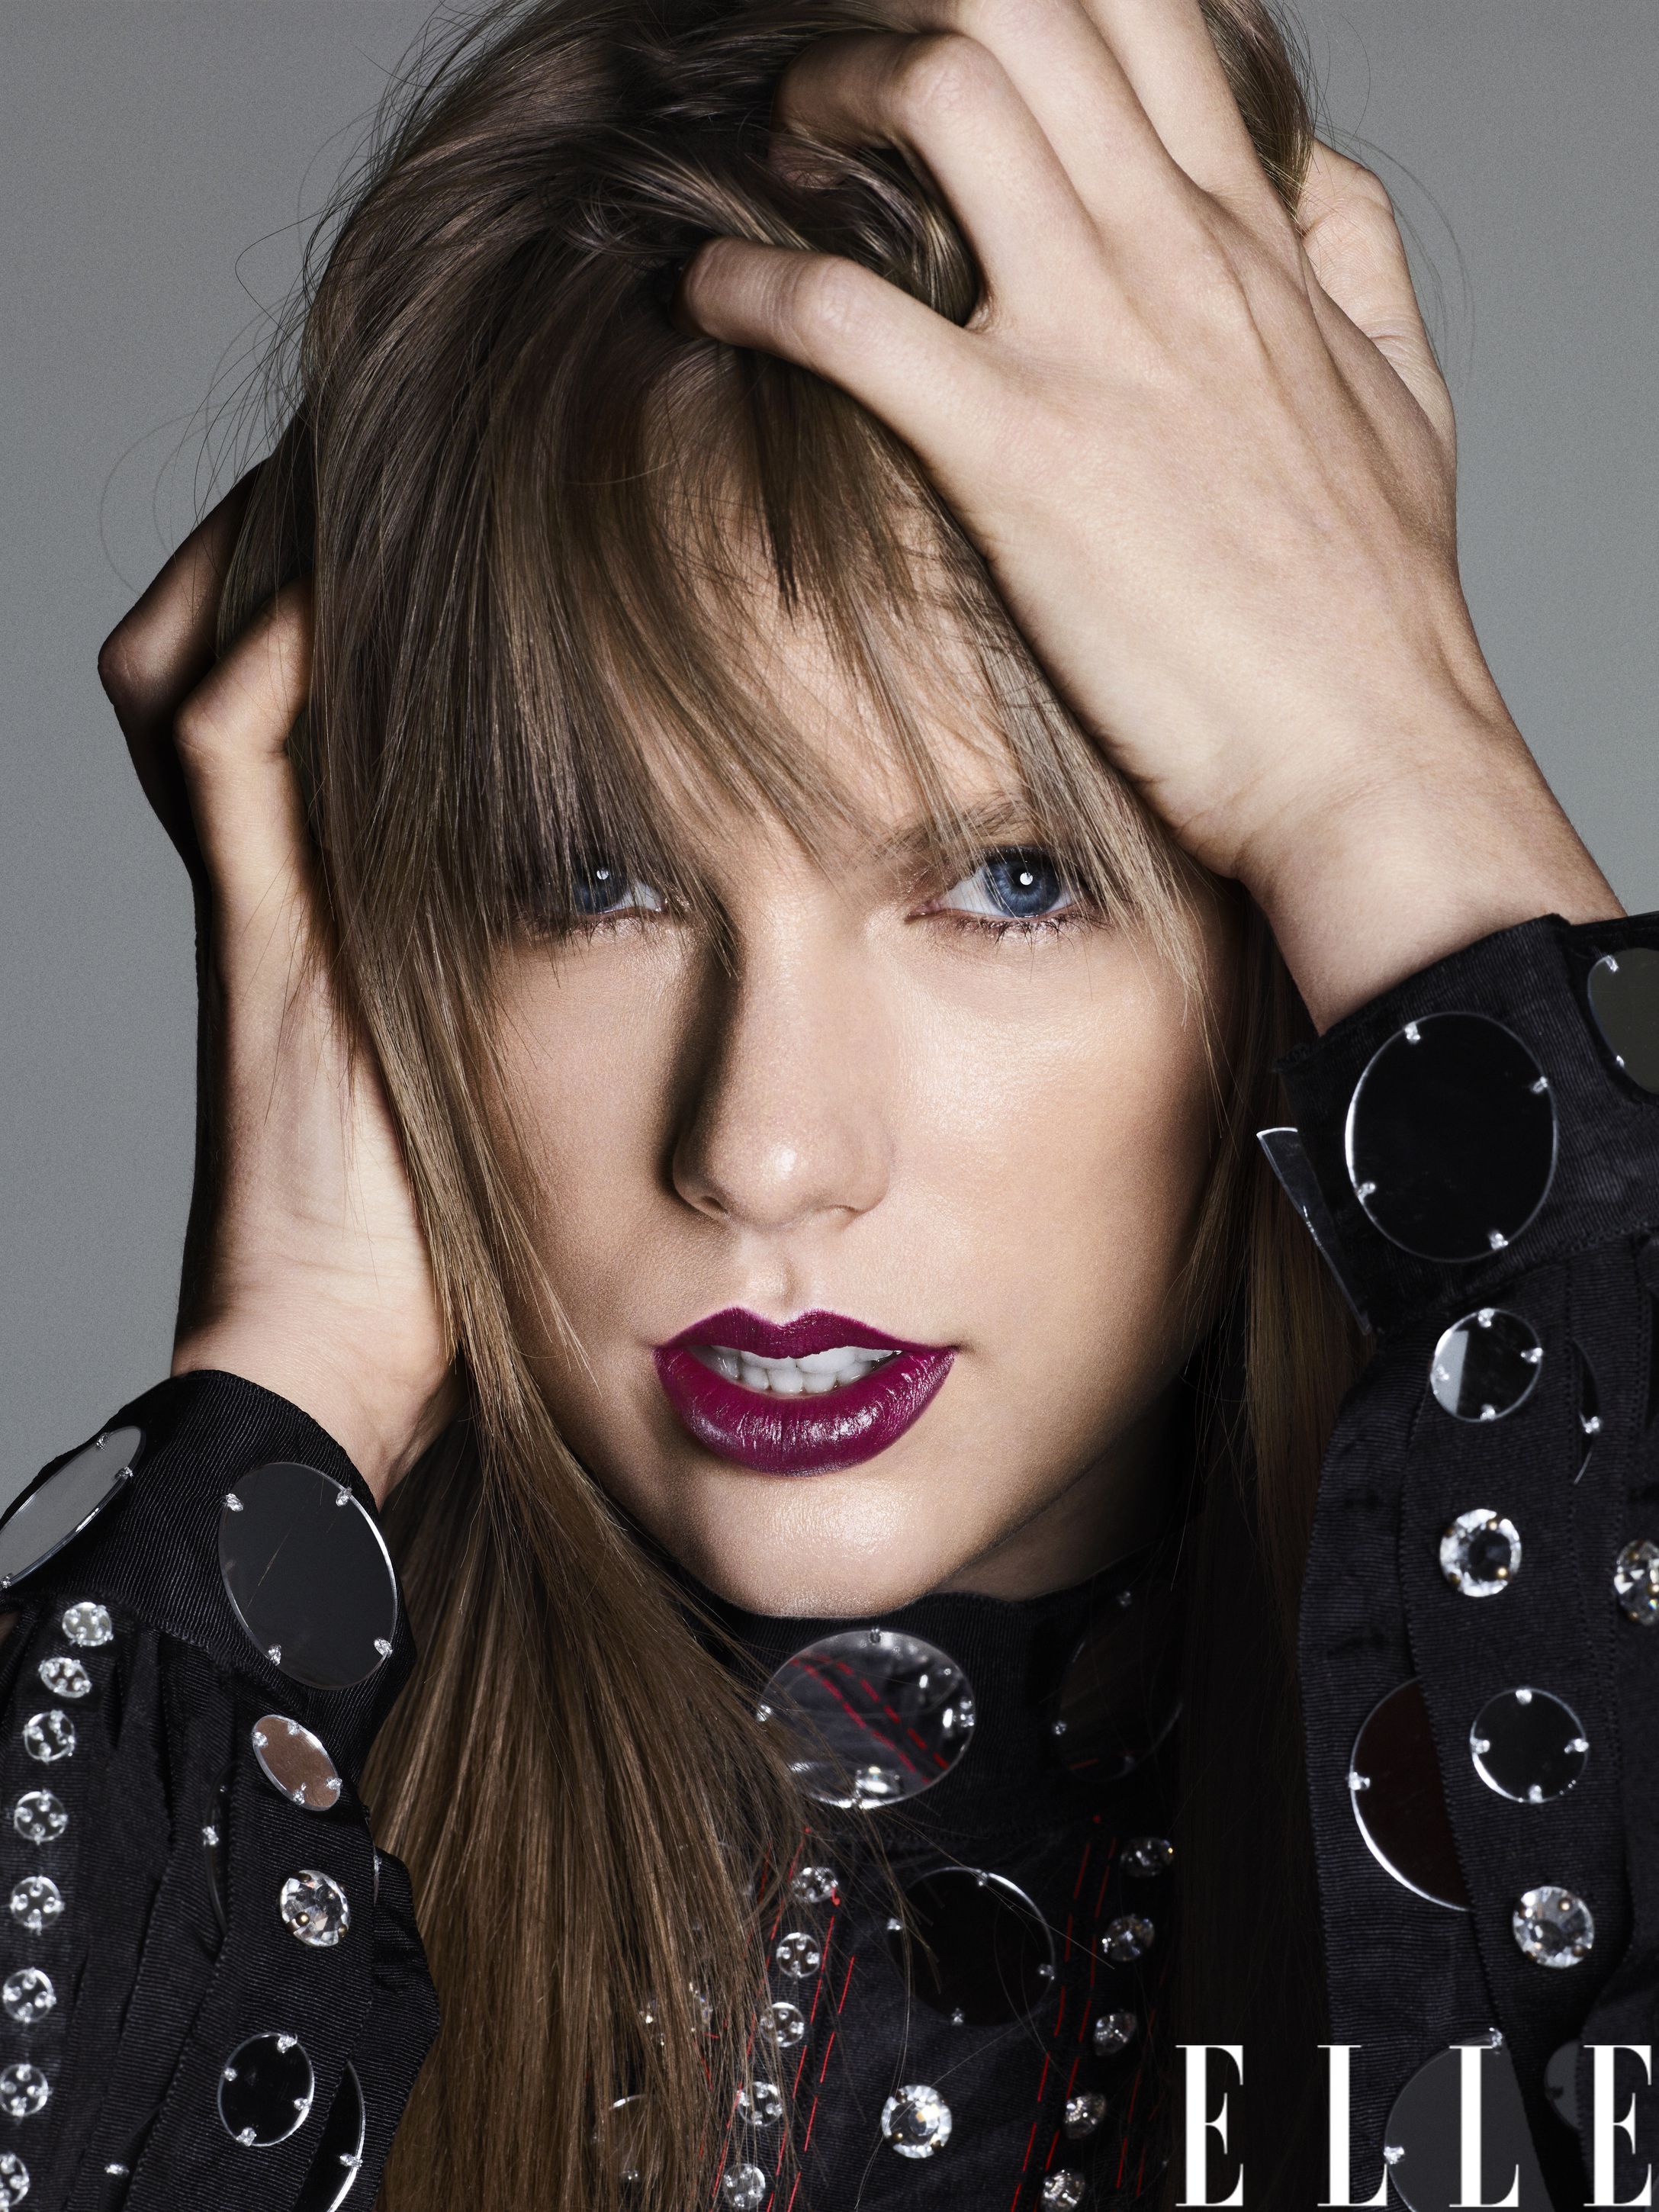 People 2175x2900 Taylor Swift simple background singer blonde women blue eyes hand(s) on head makeup Elle Magazine face lipstick